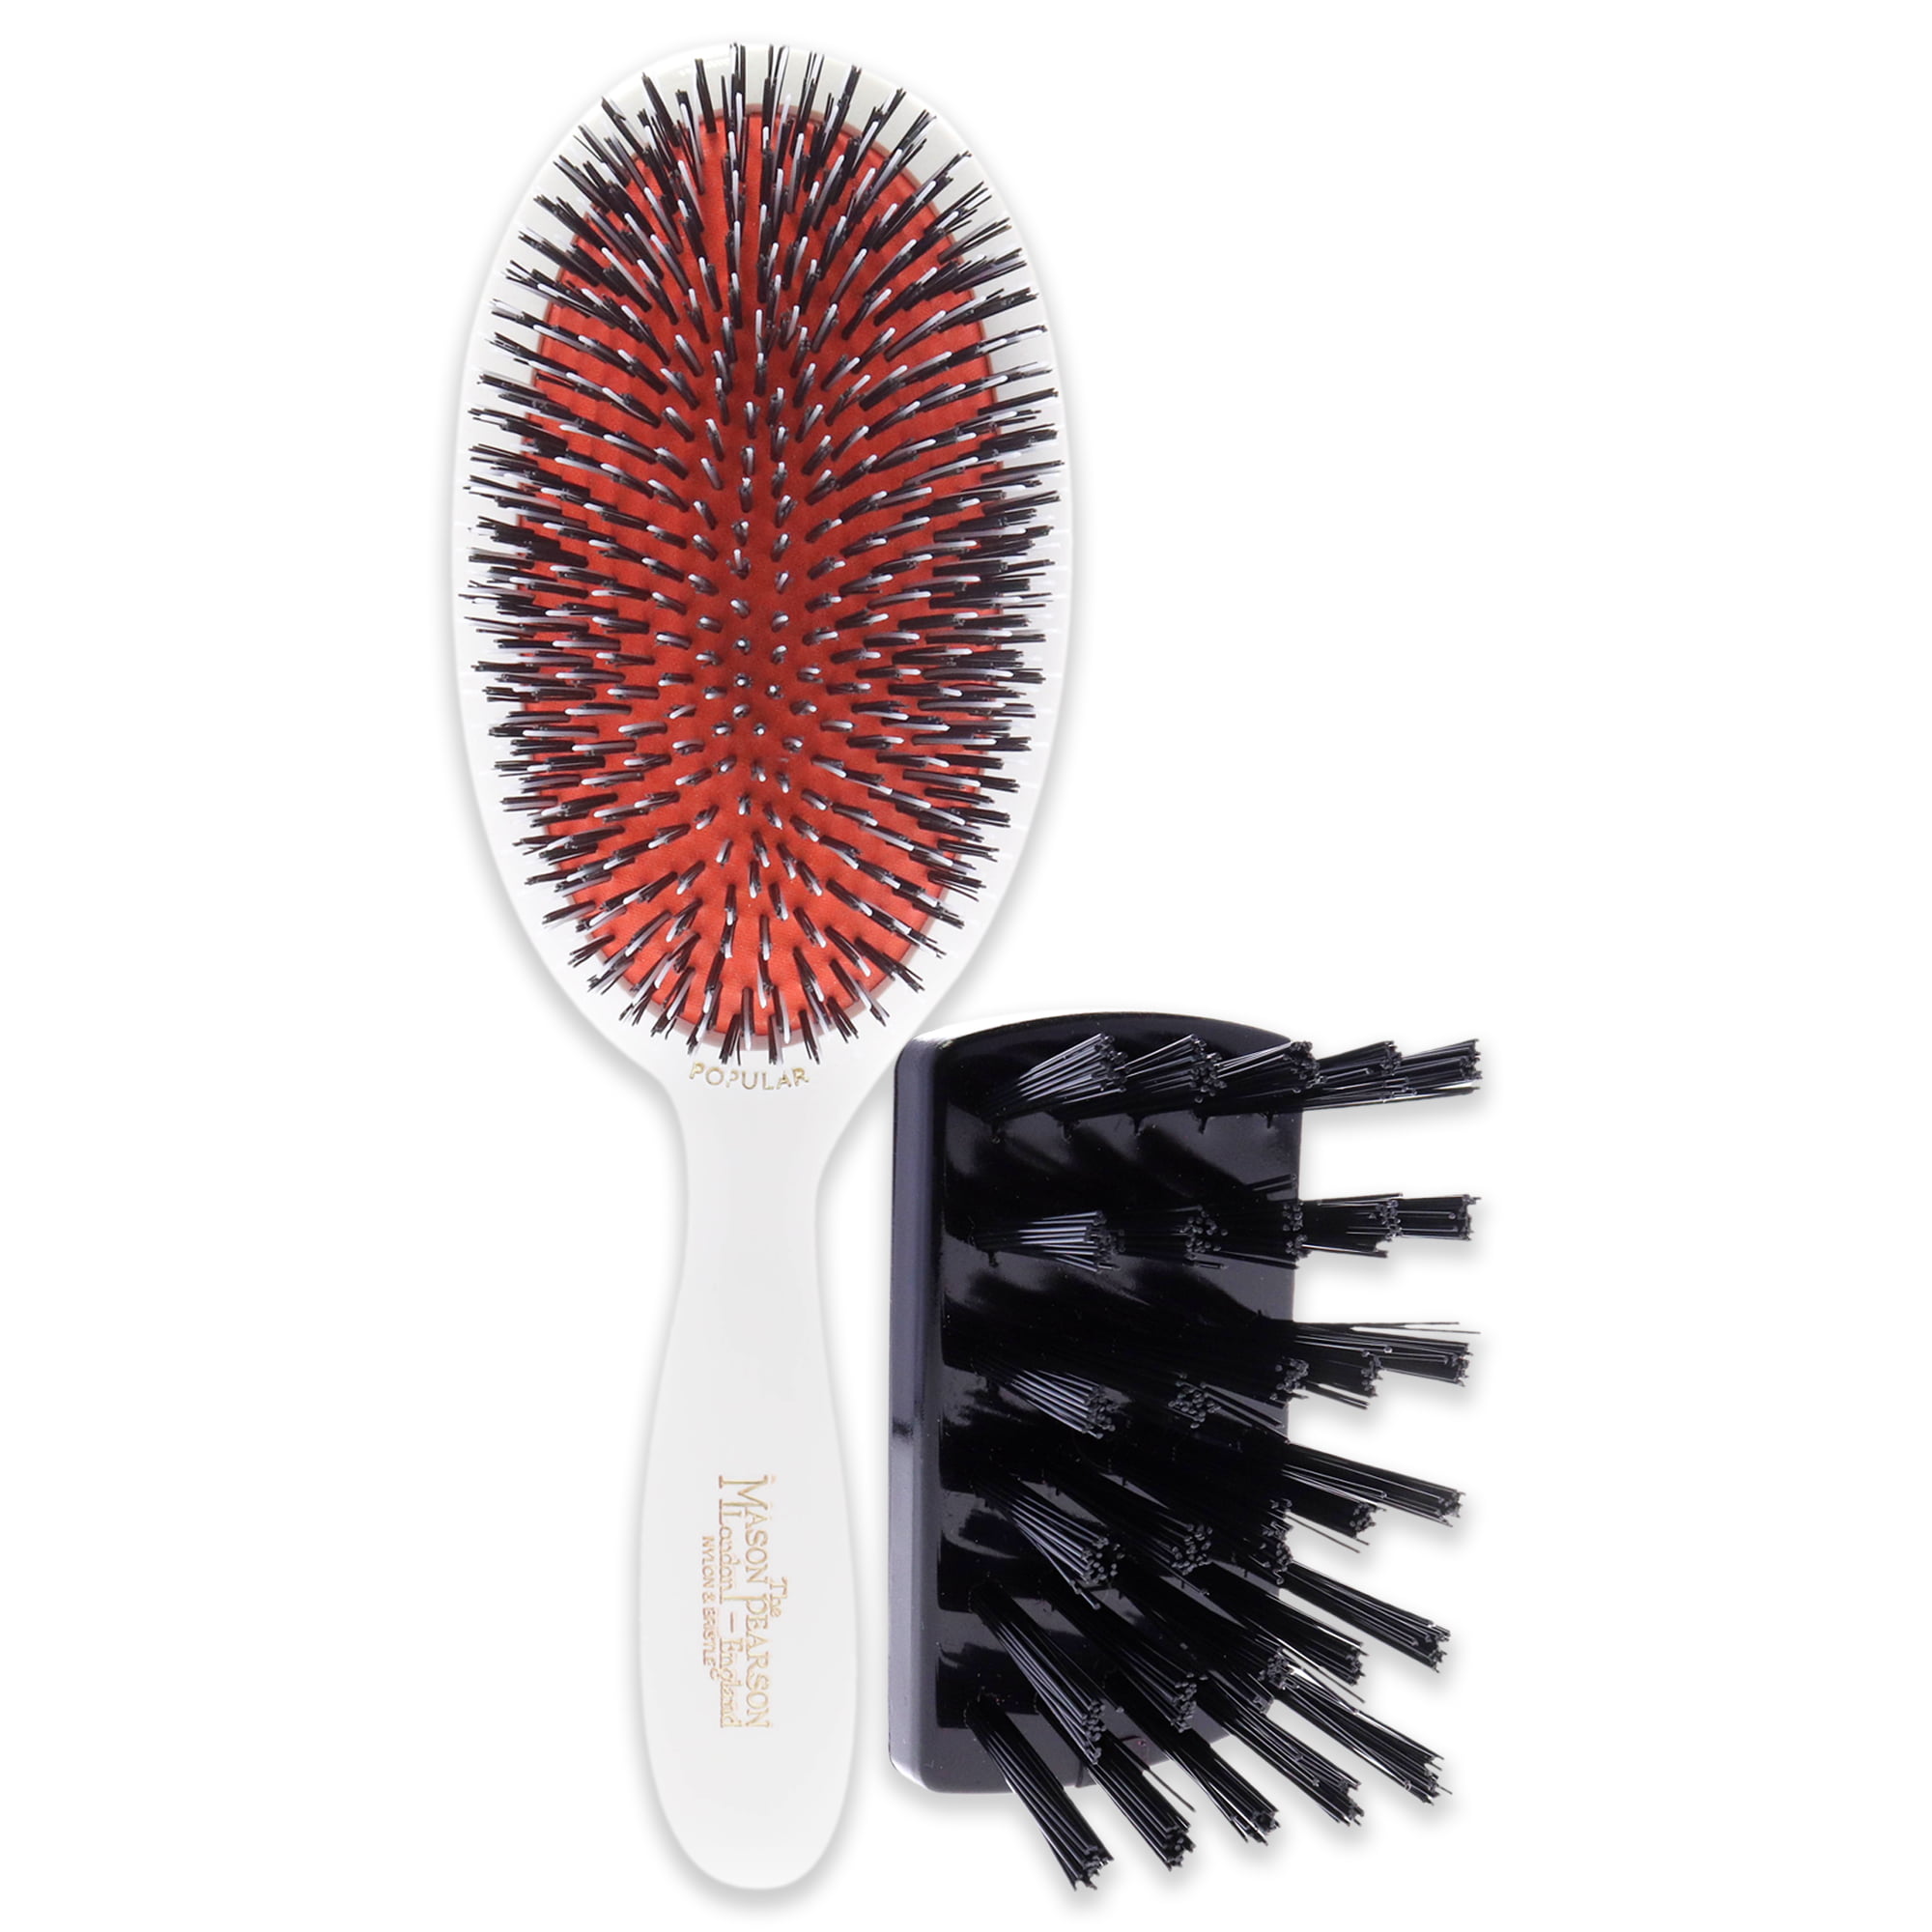 Mason Pearson Large BN1 Bristle Nylon Ivory, Pc Brush - and Popular Brush 2 Brush Cleaning Hair and